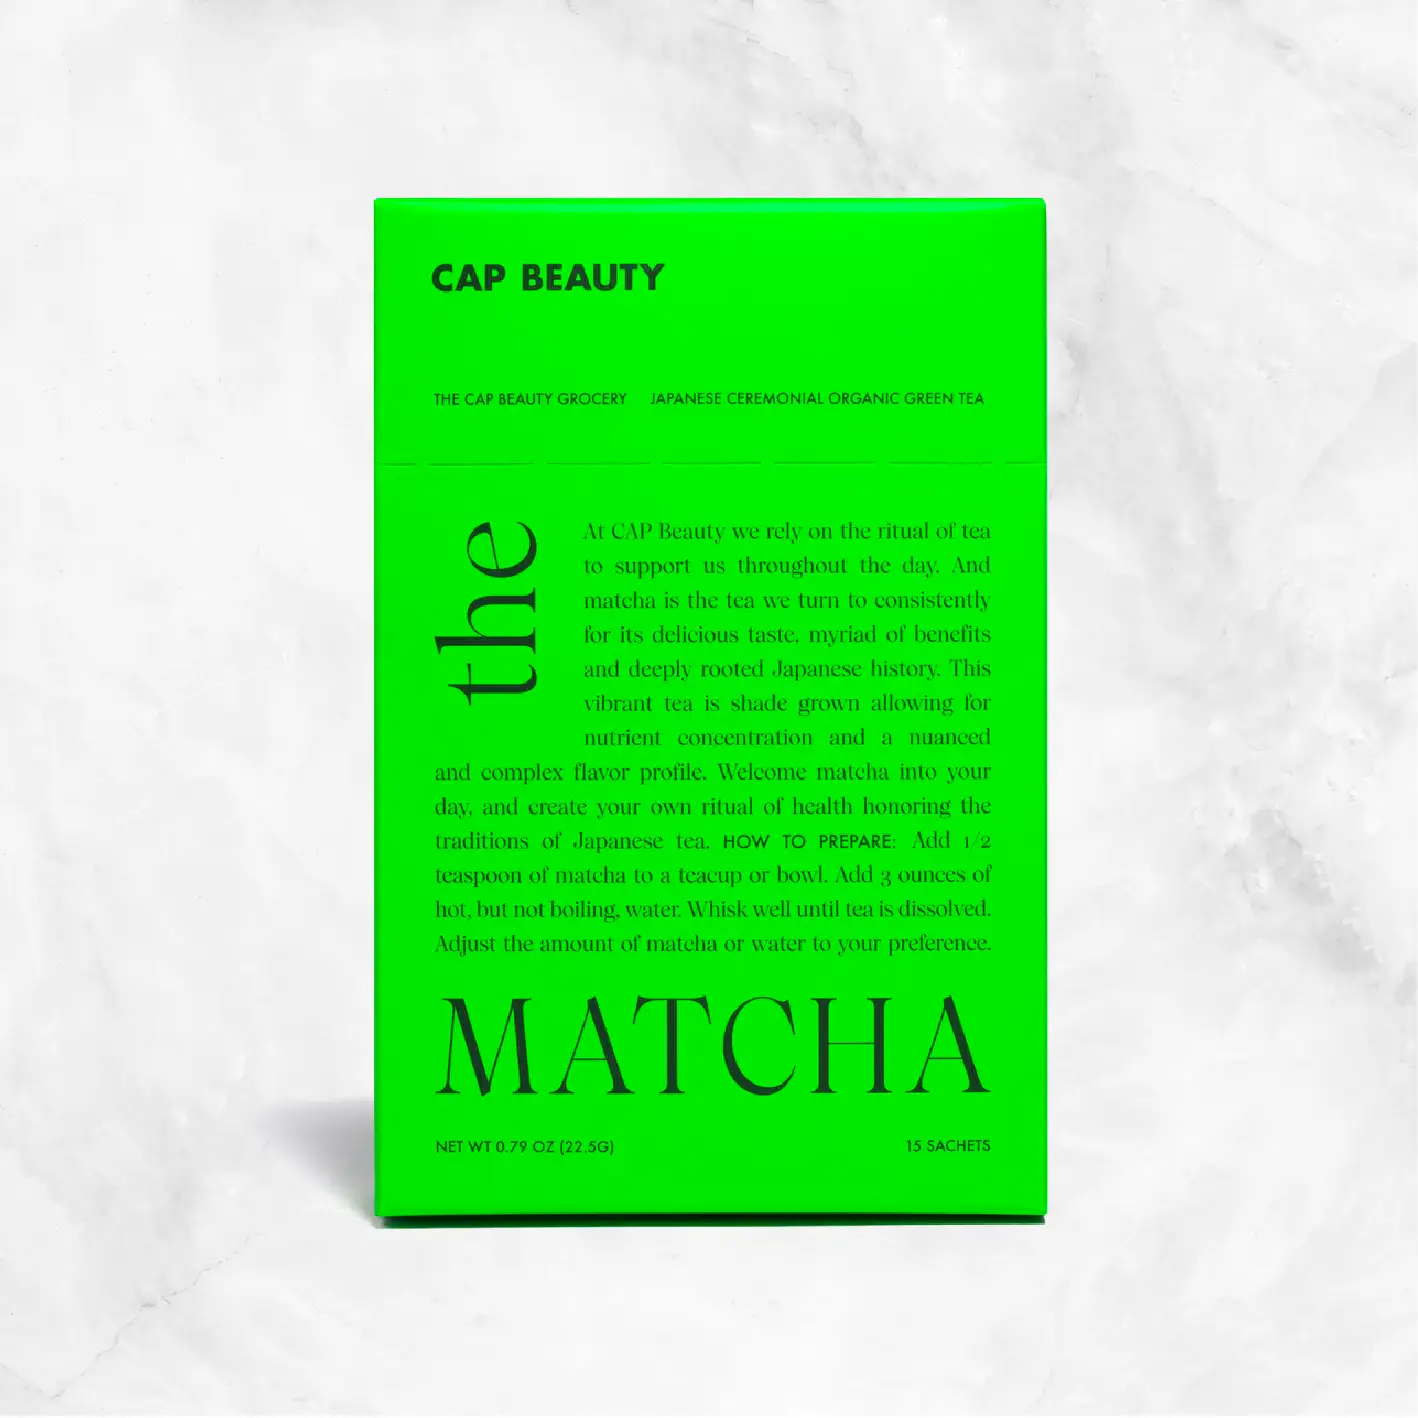 Cap Beauty Matcha Sticks Box Delivery